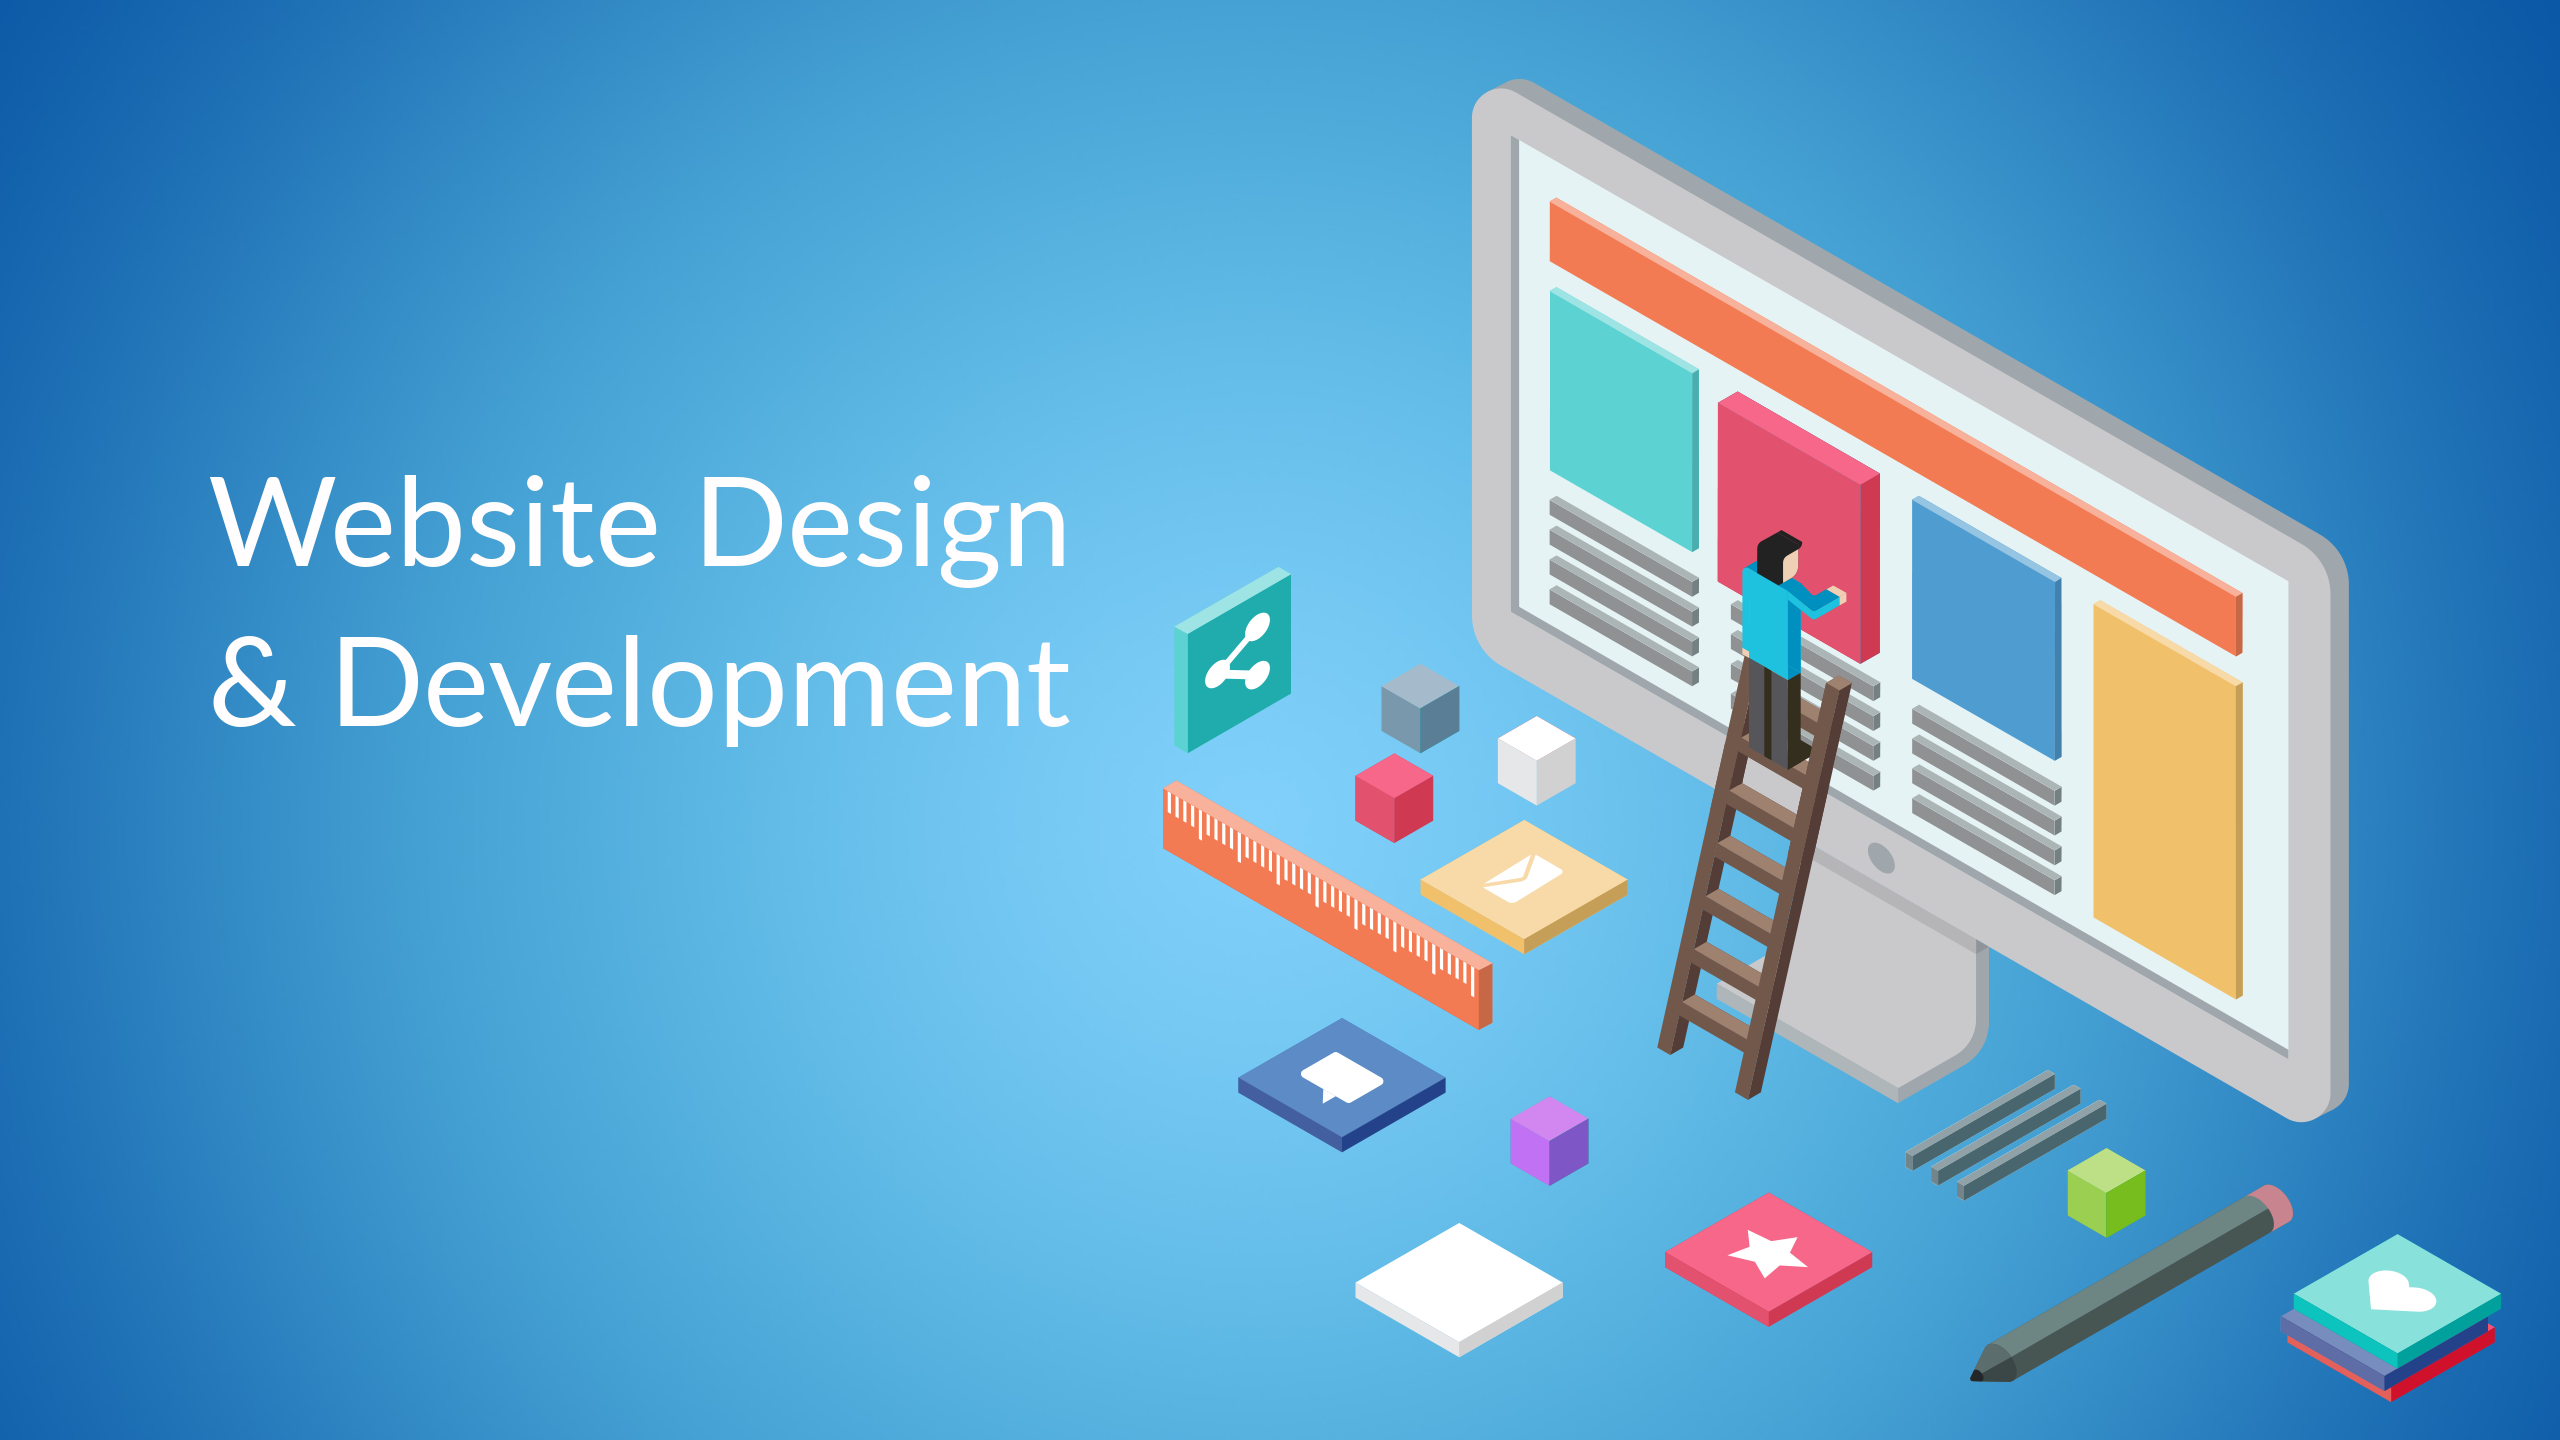 Web Design & Development bundle offer